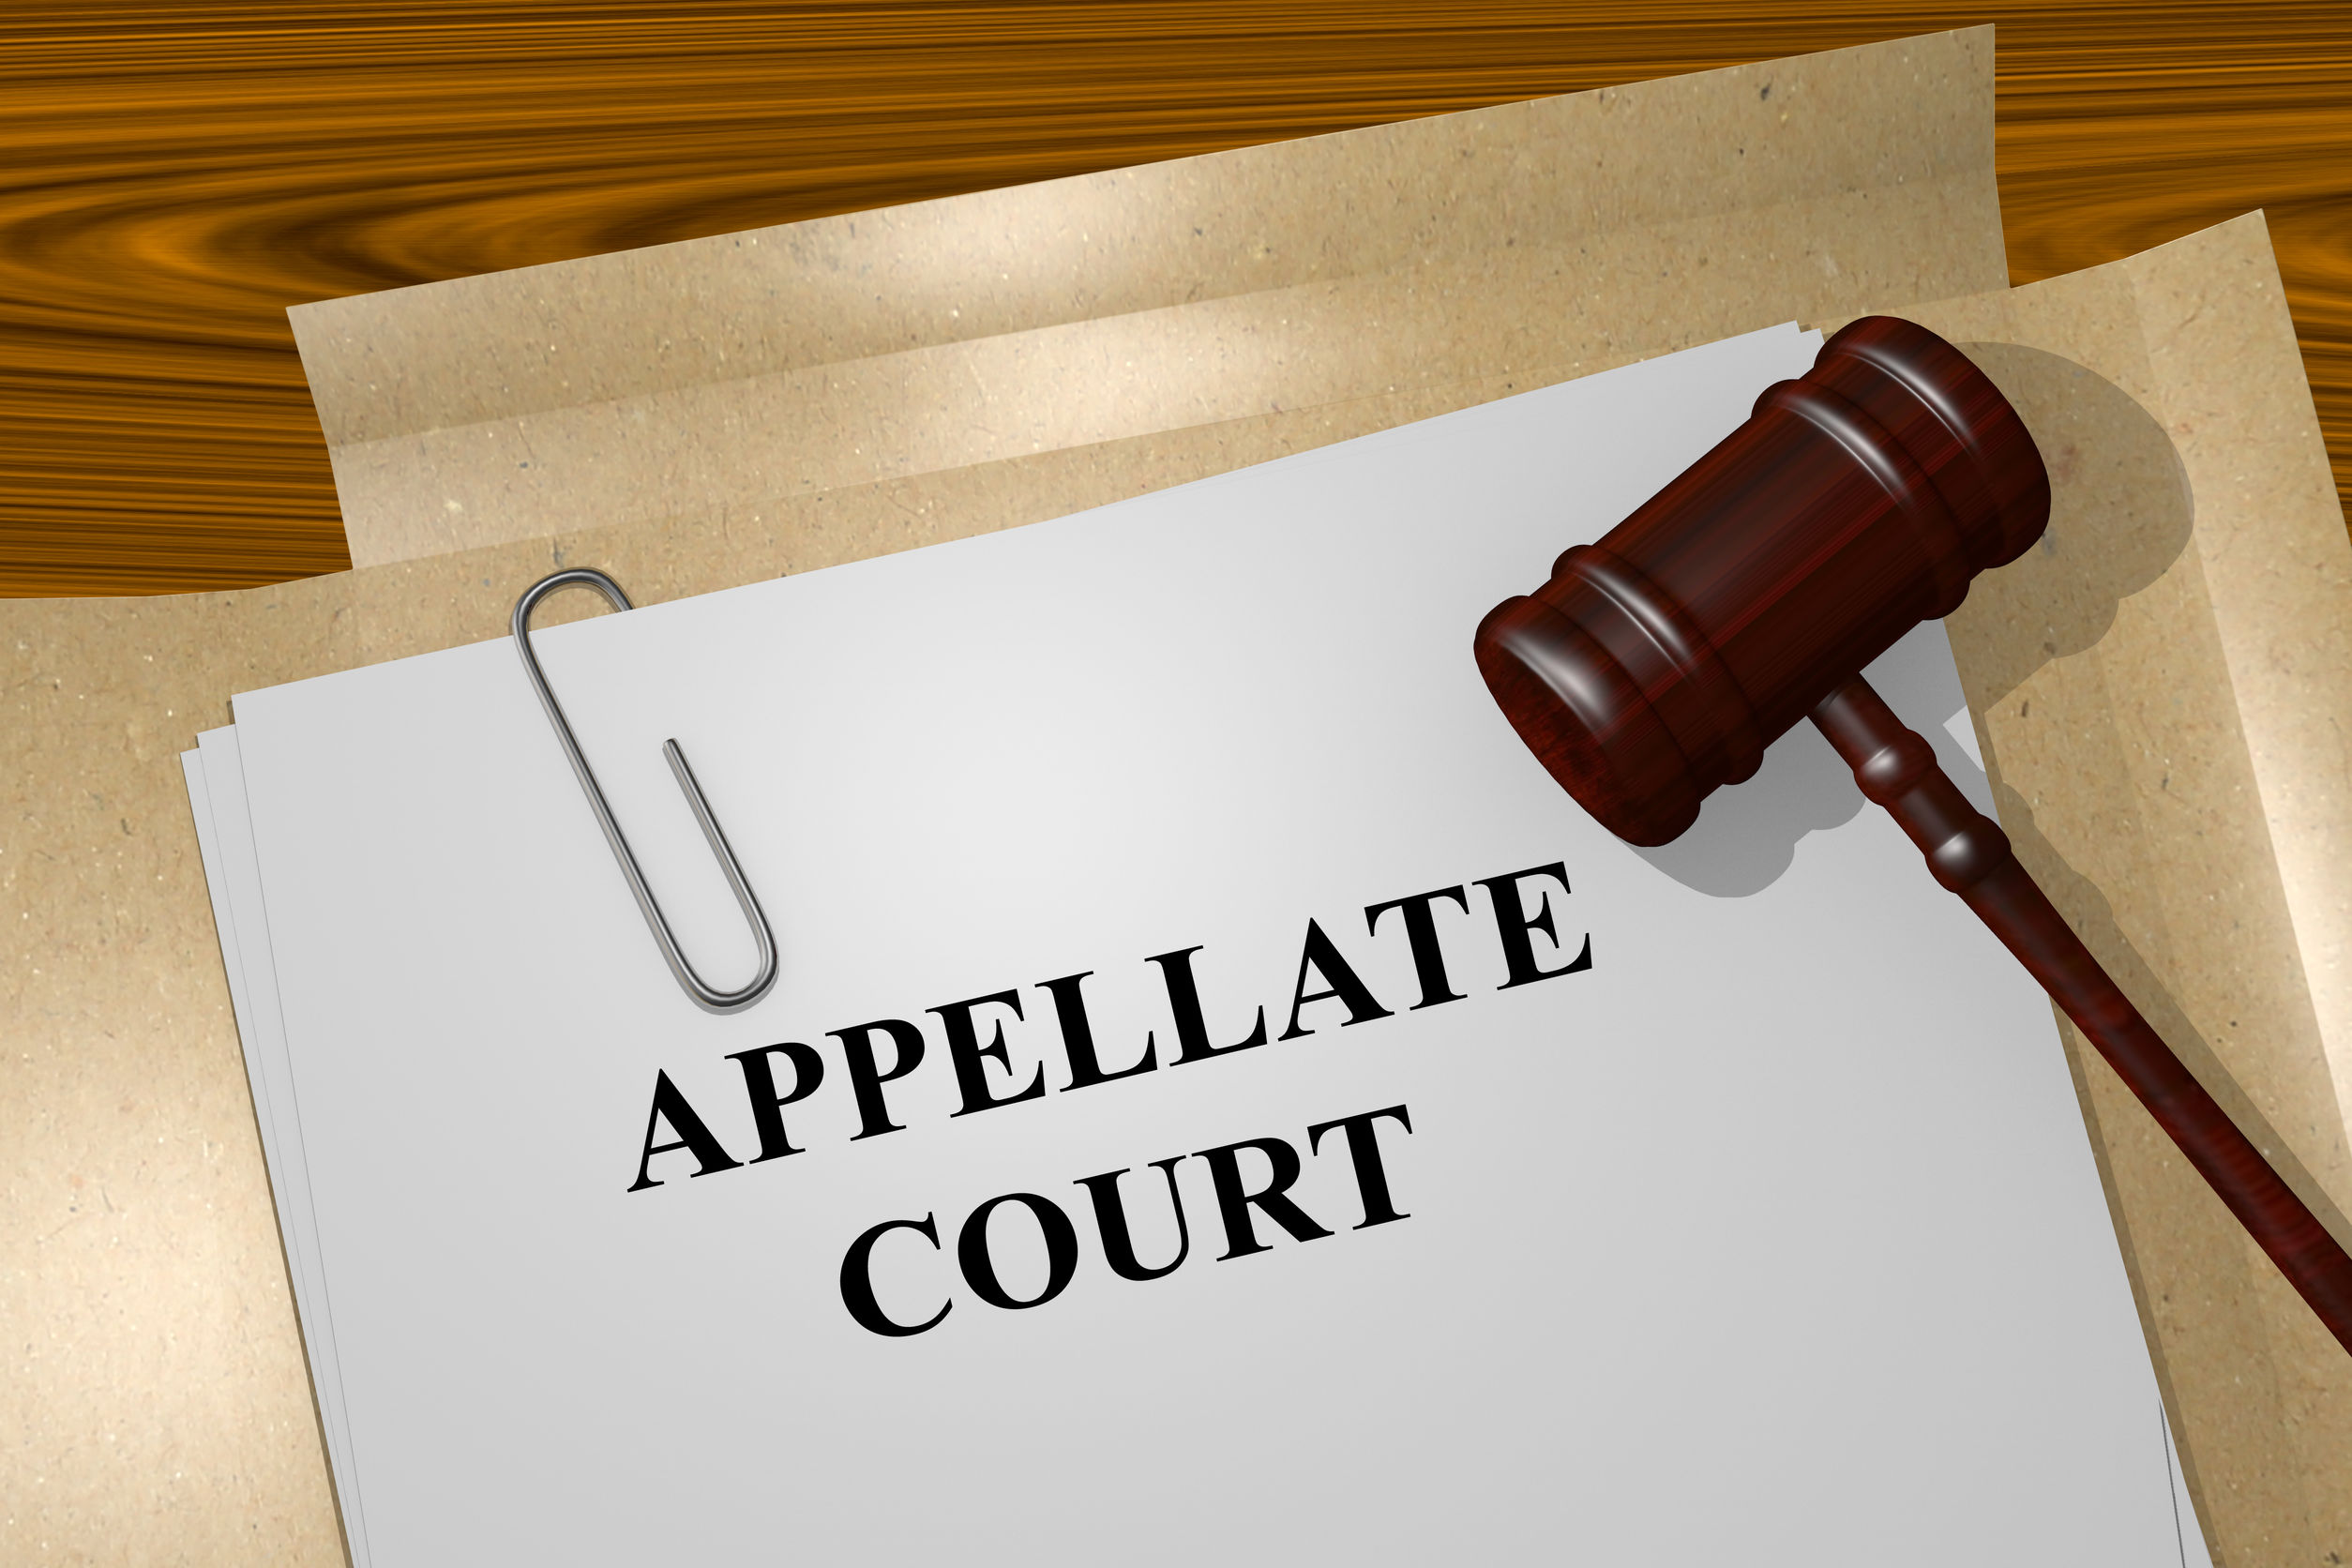 Appellate Court written on file folder